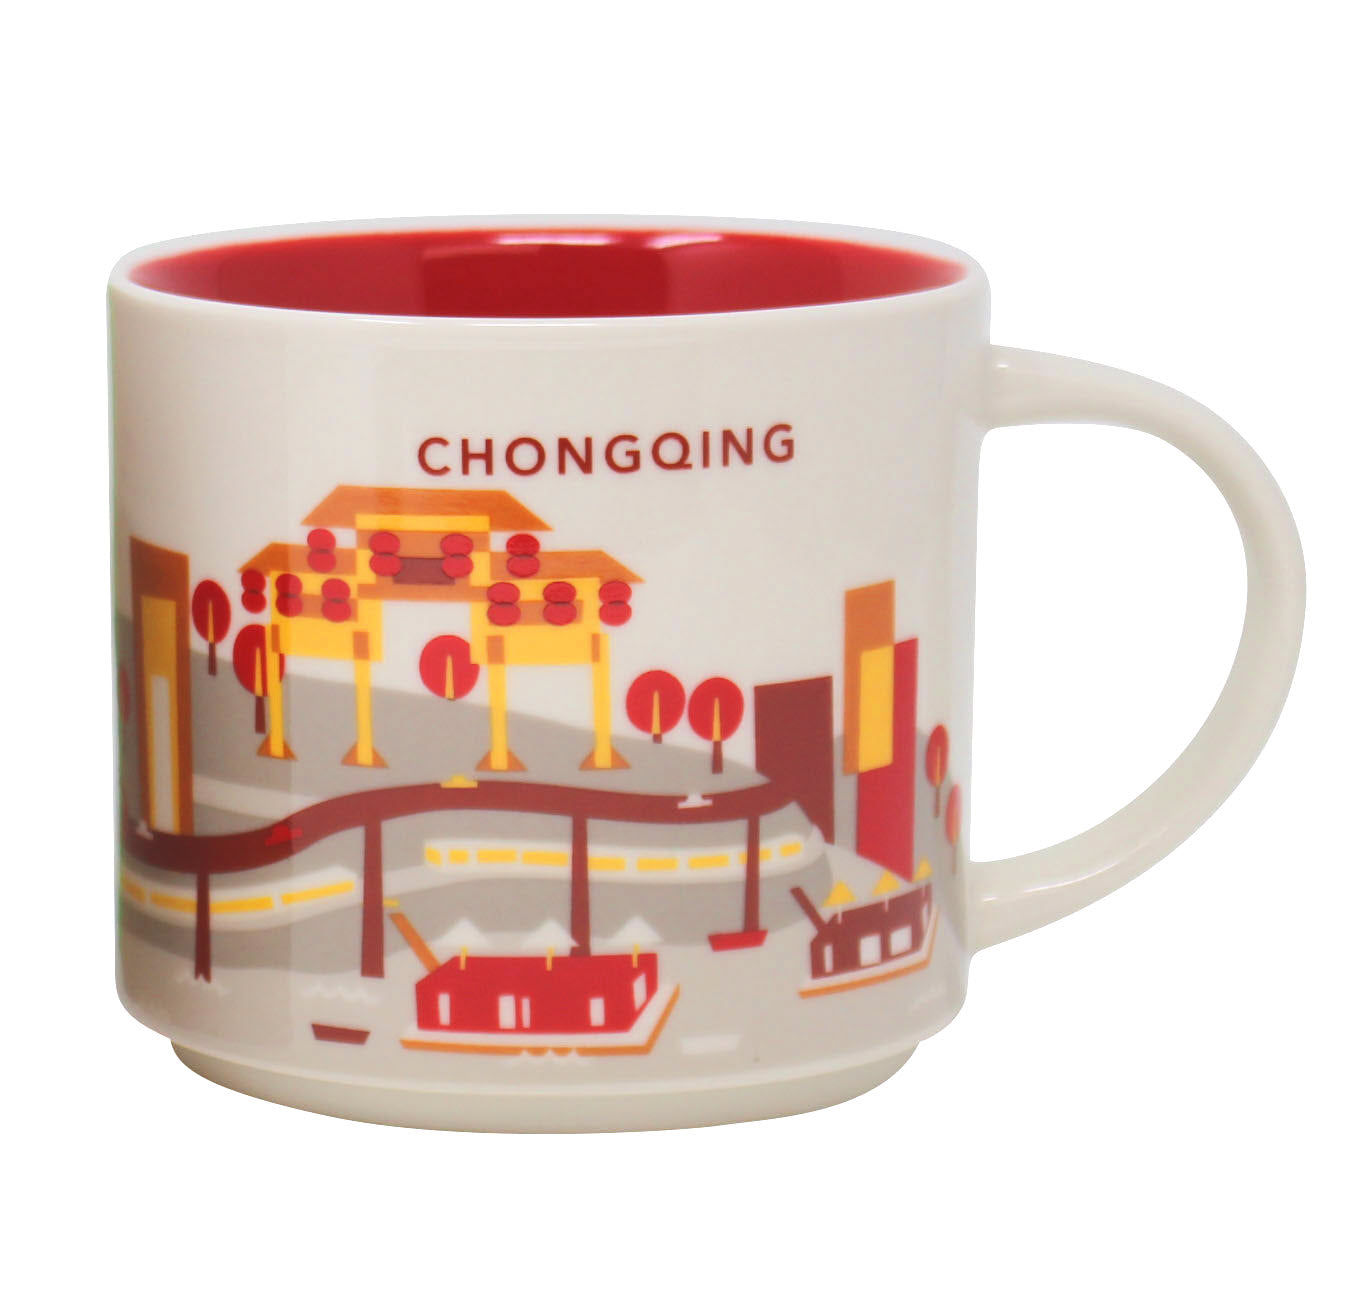 Starbucks You Are Here Series Chongqing Ceramic Mug, 14 Oz